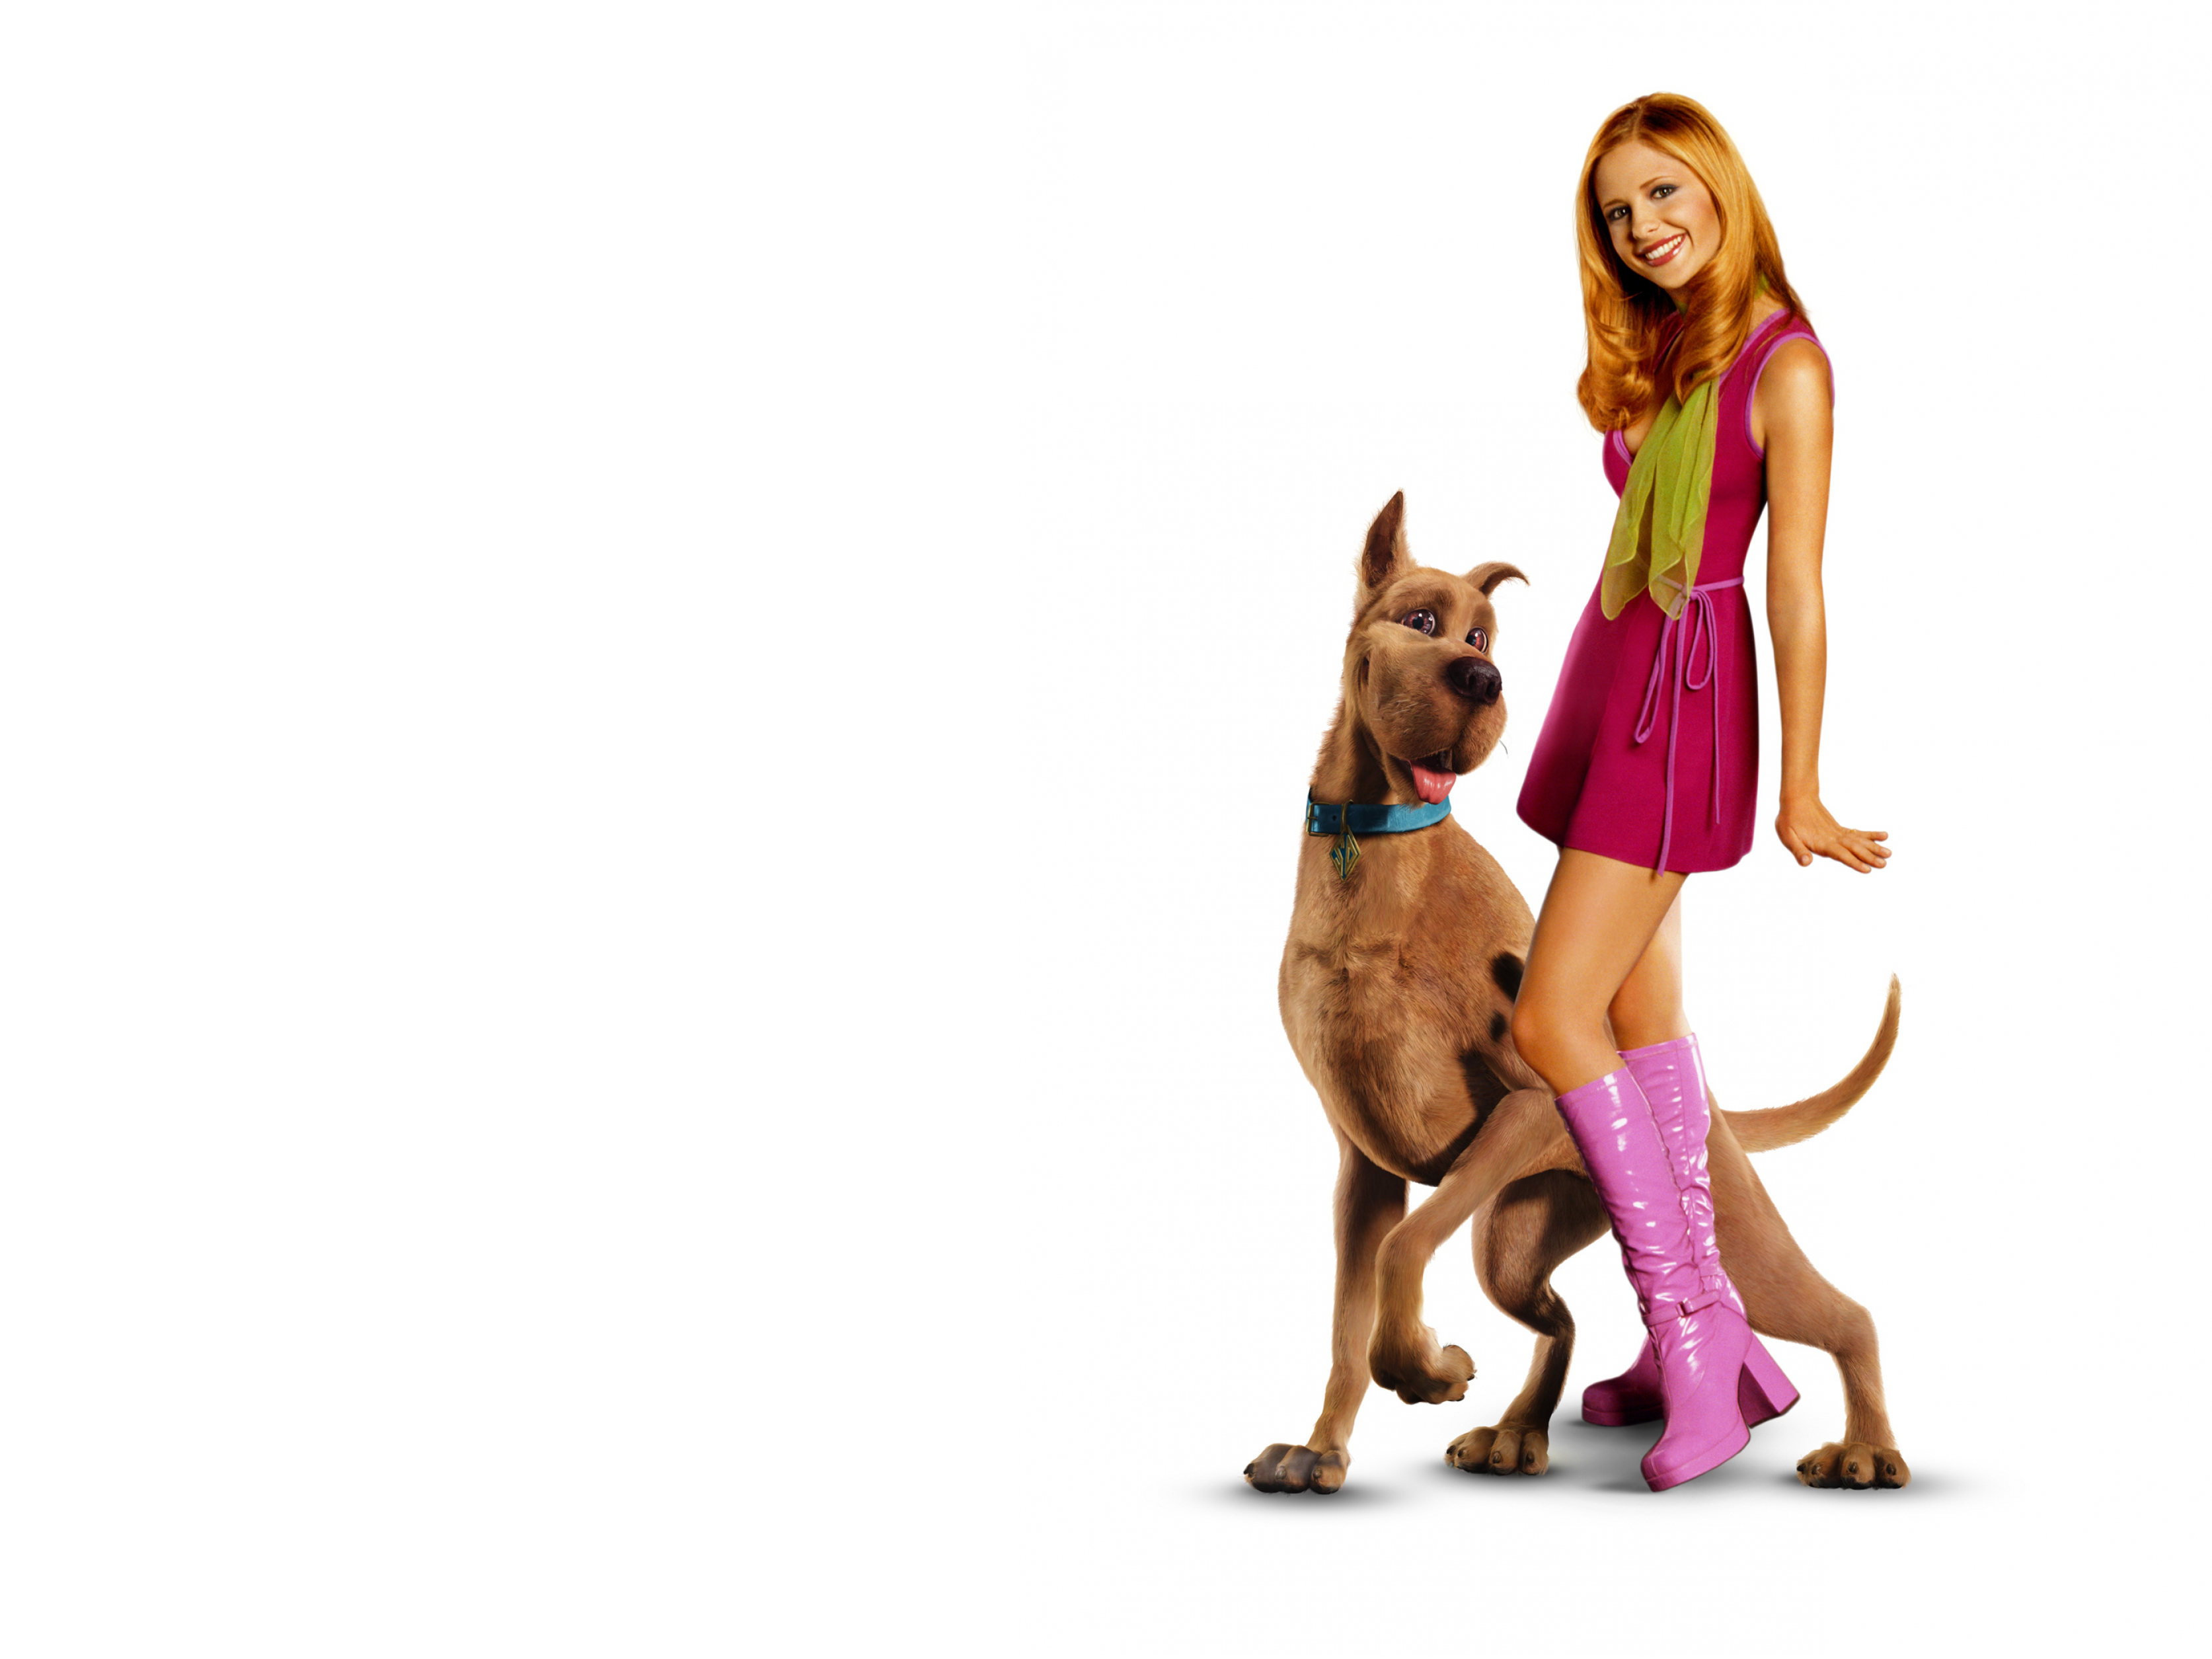 Baixar papel de parede para celular de Sarah Michelle Gellar, Scooby Doo, Filme gratuito.